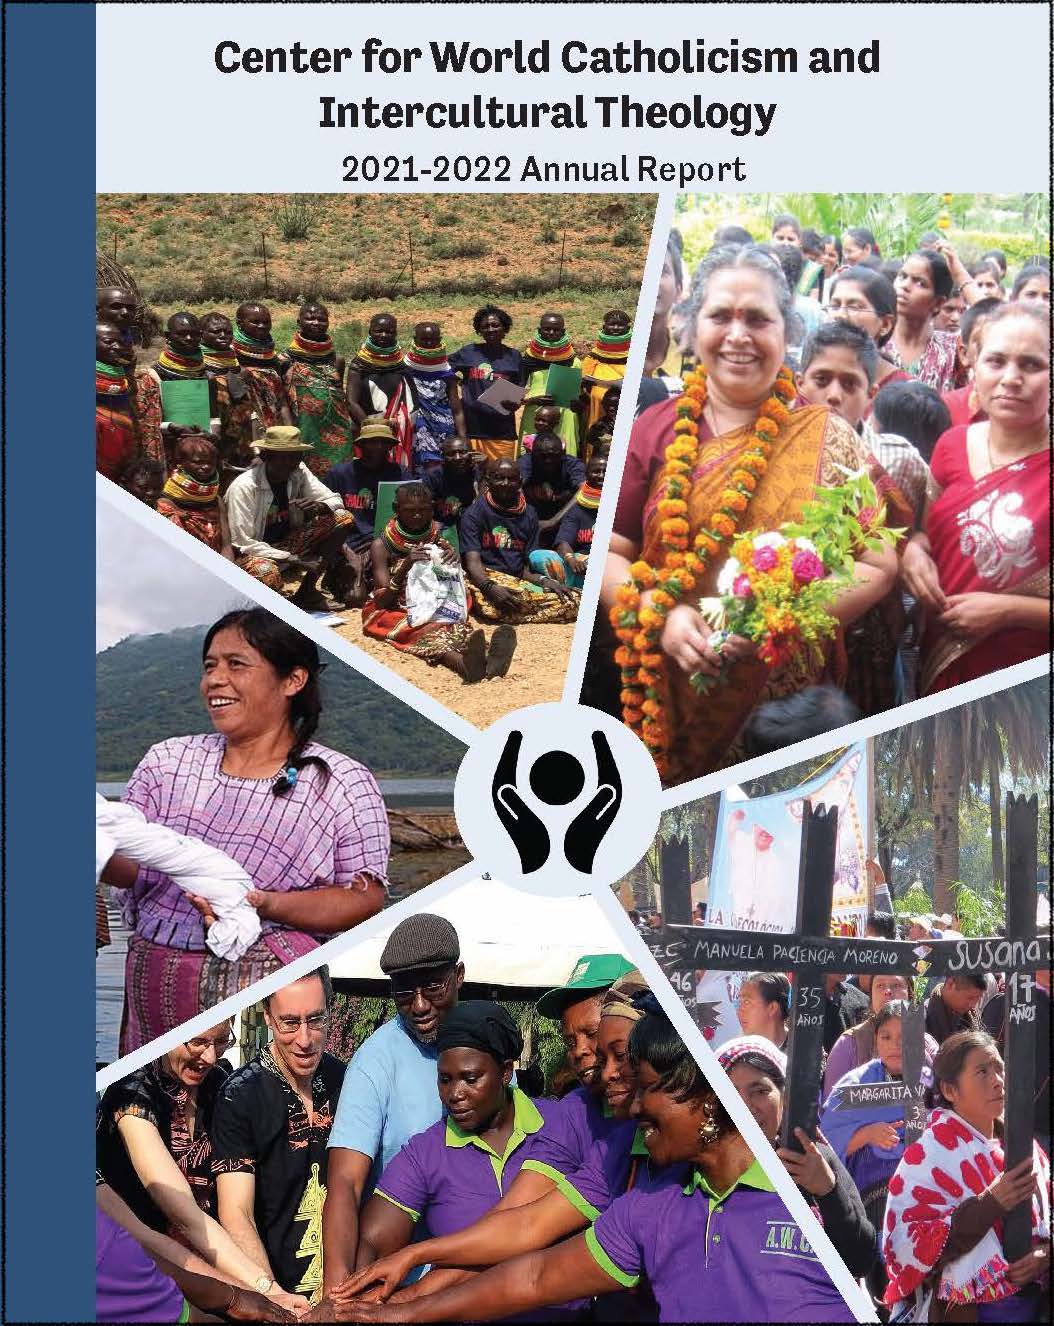 CWCIT's 2021-22 annual report